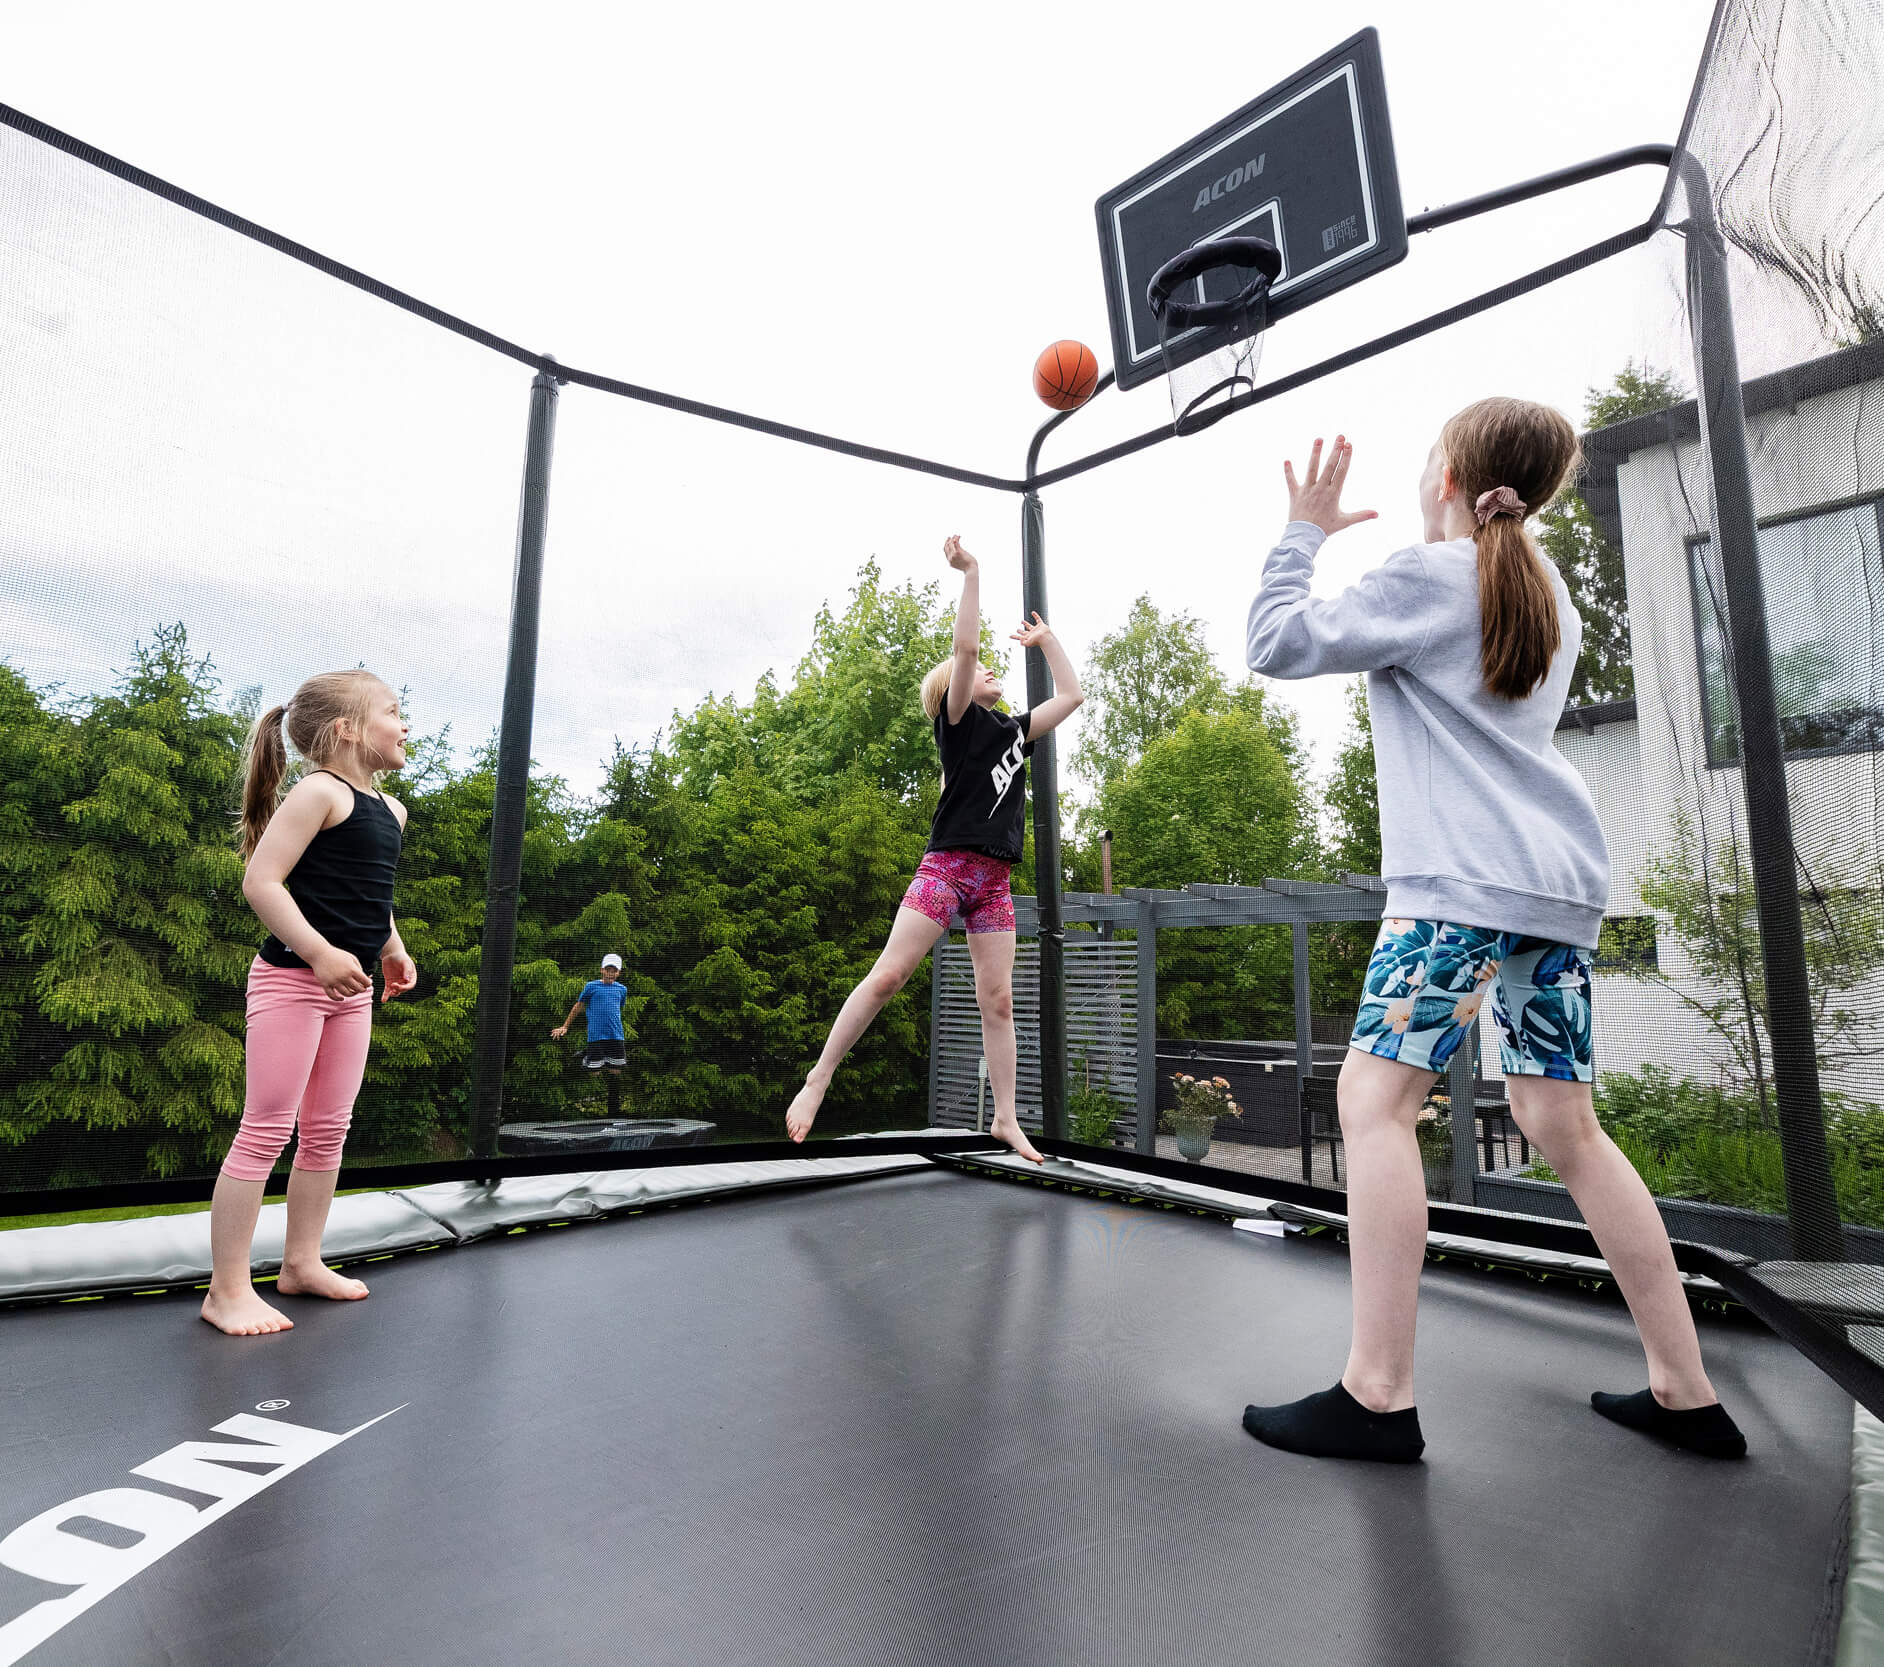 3 girls playing basketball on a trampoline.